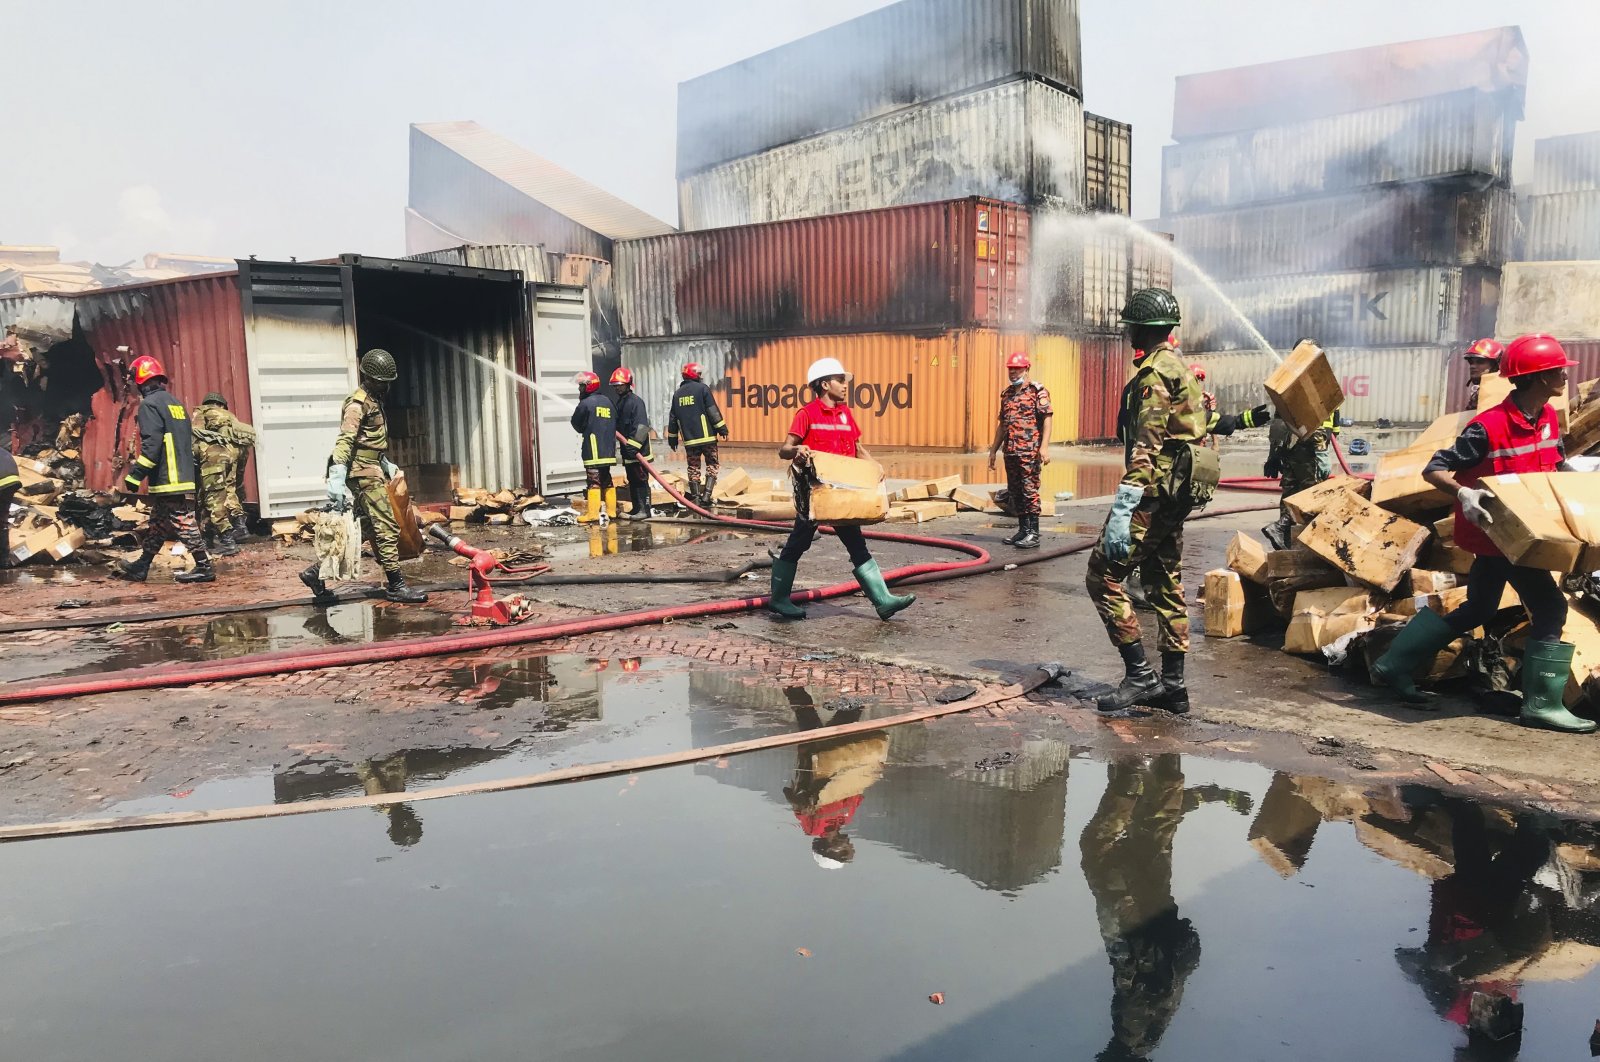 Korban tewas kebakaran depot Bangladesh meningkat menjadi 49 di tengah kekhawatiran industri